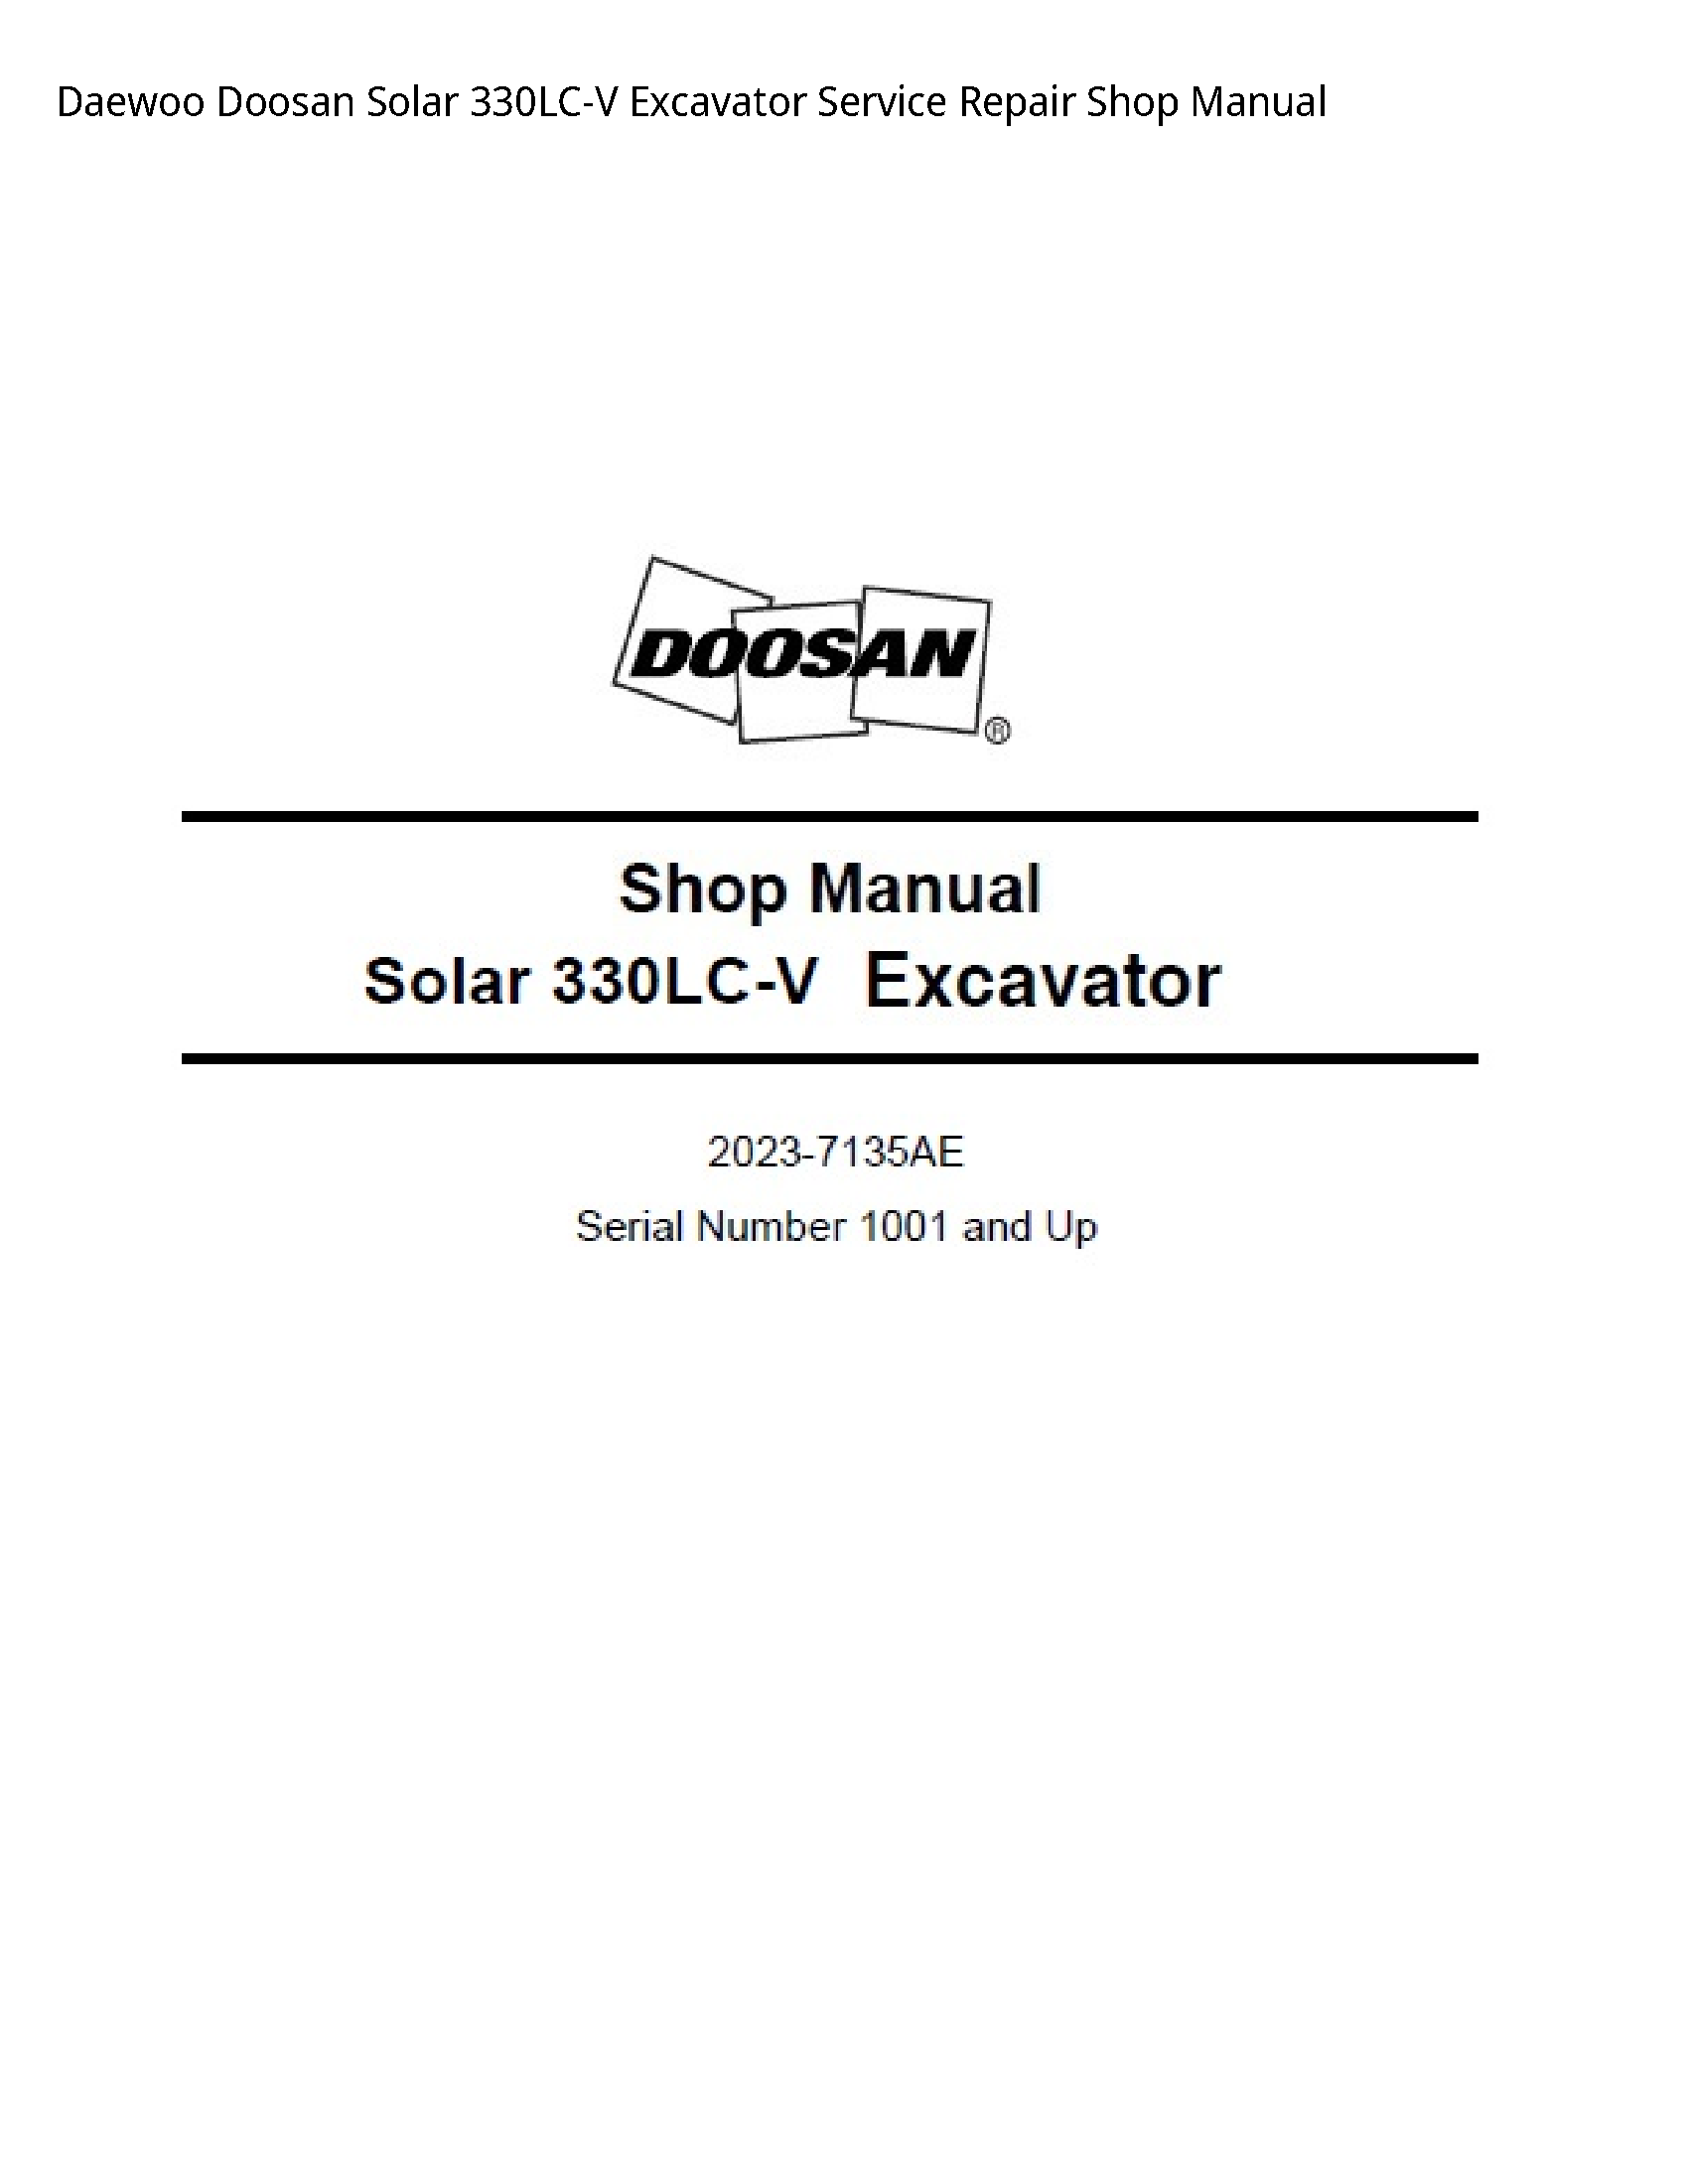 Daewoo Doosan 330LC-V Solar Excavator manual